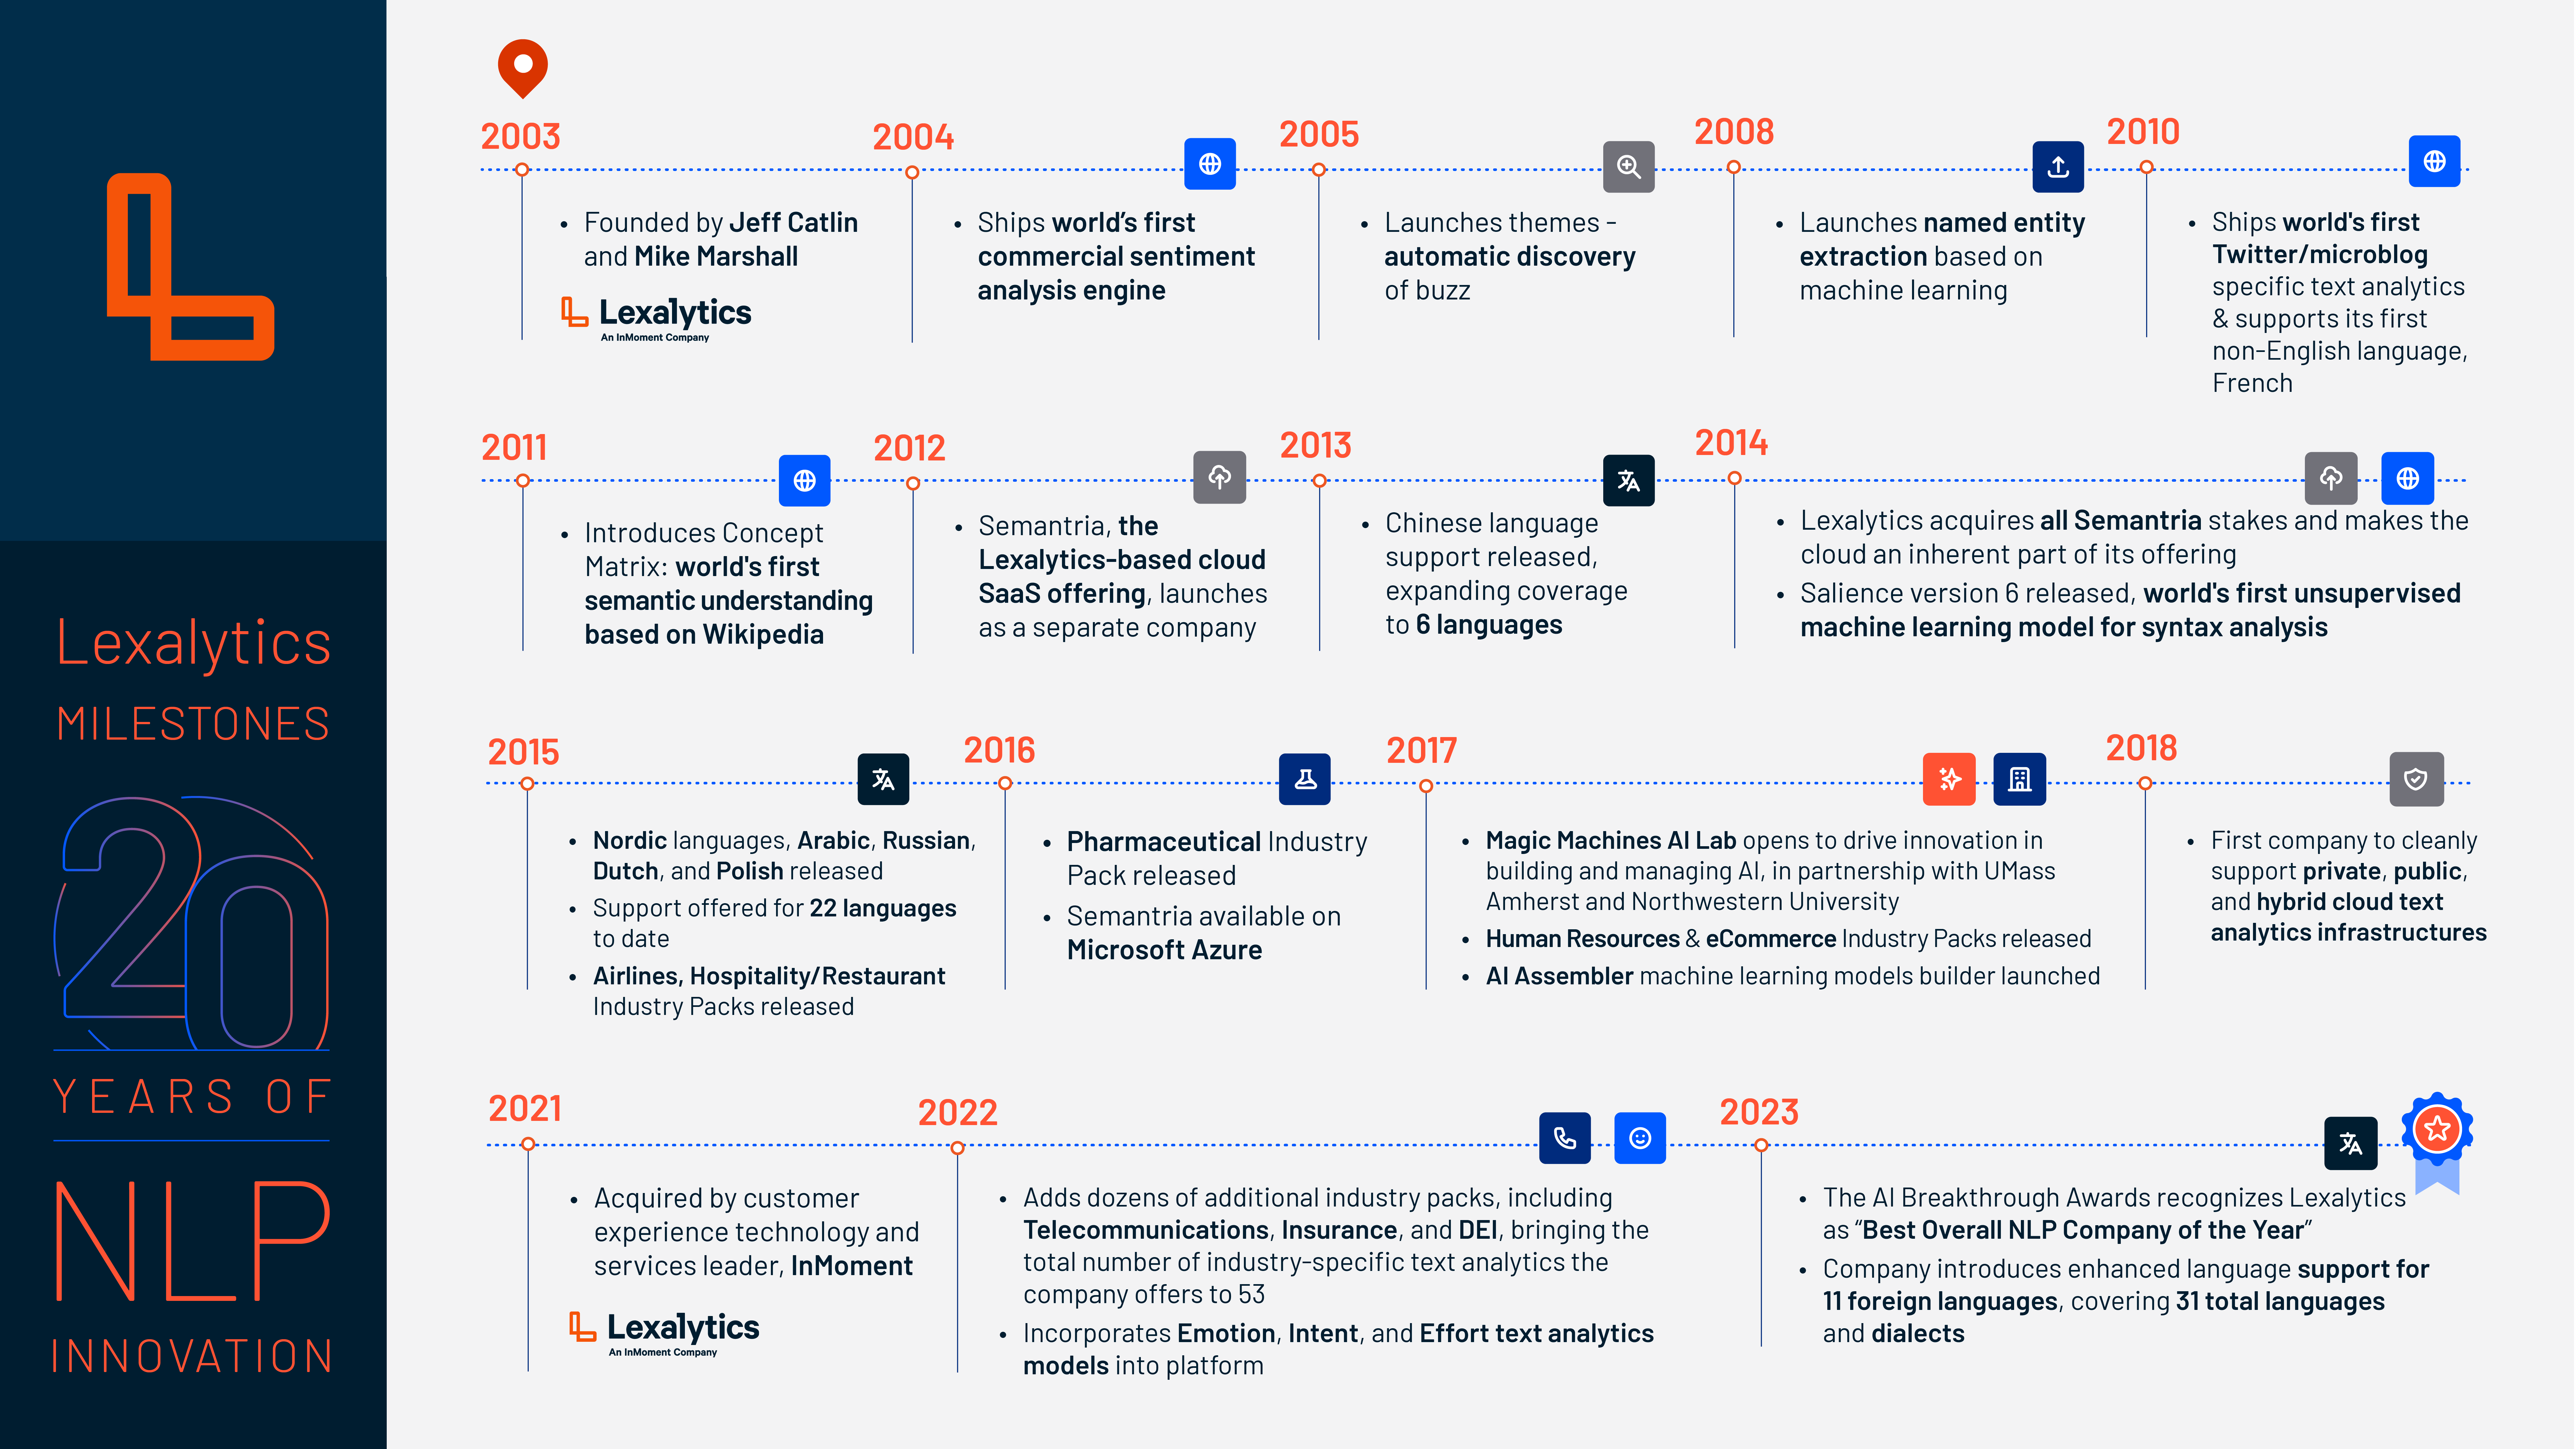 Lexalytics Celebrates Its Anniversary: 20 Years of NLP Innovation